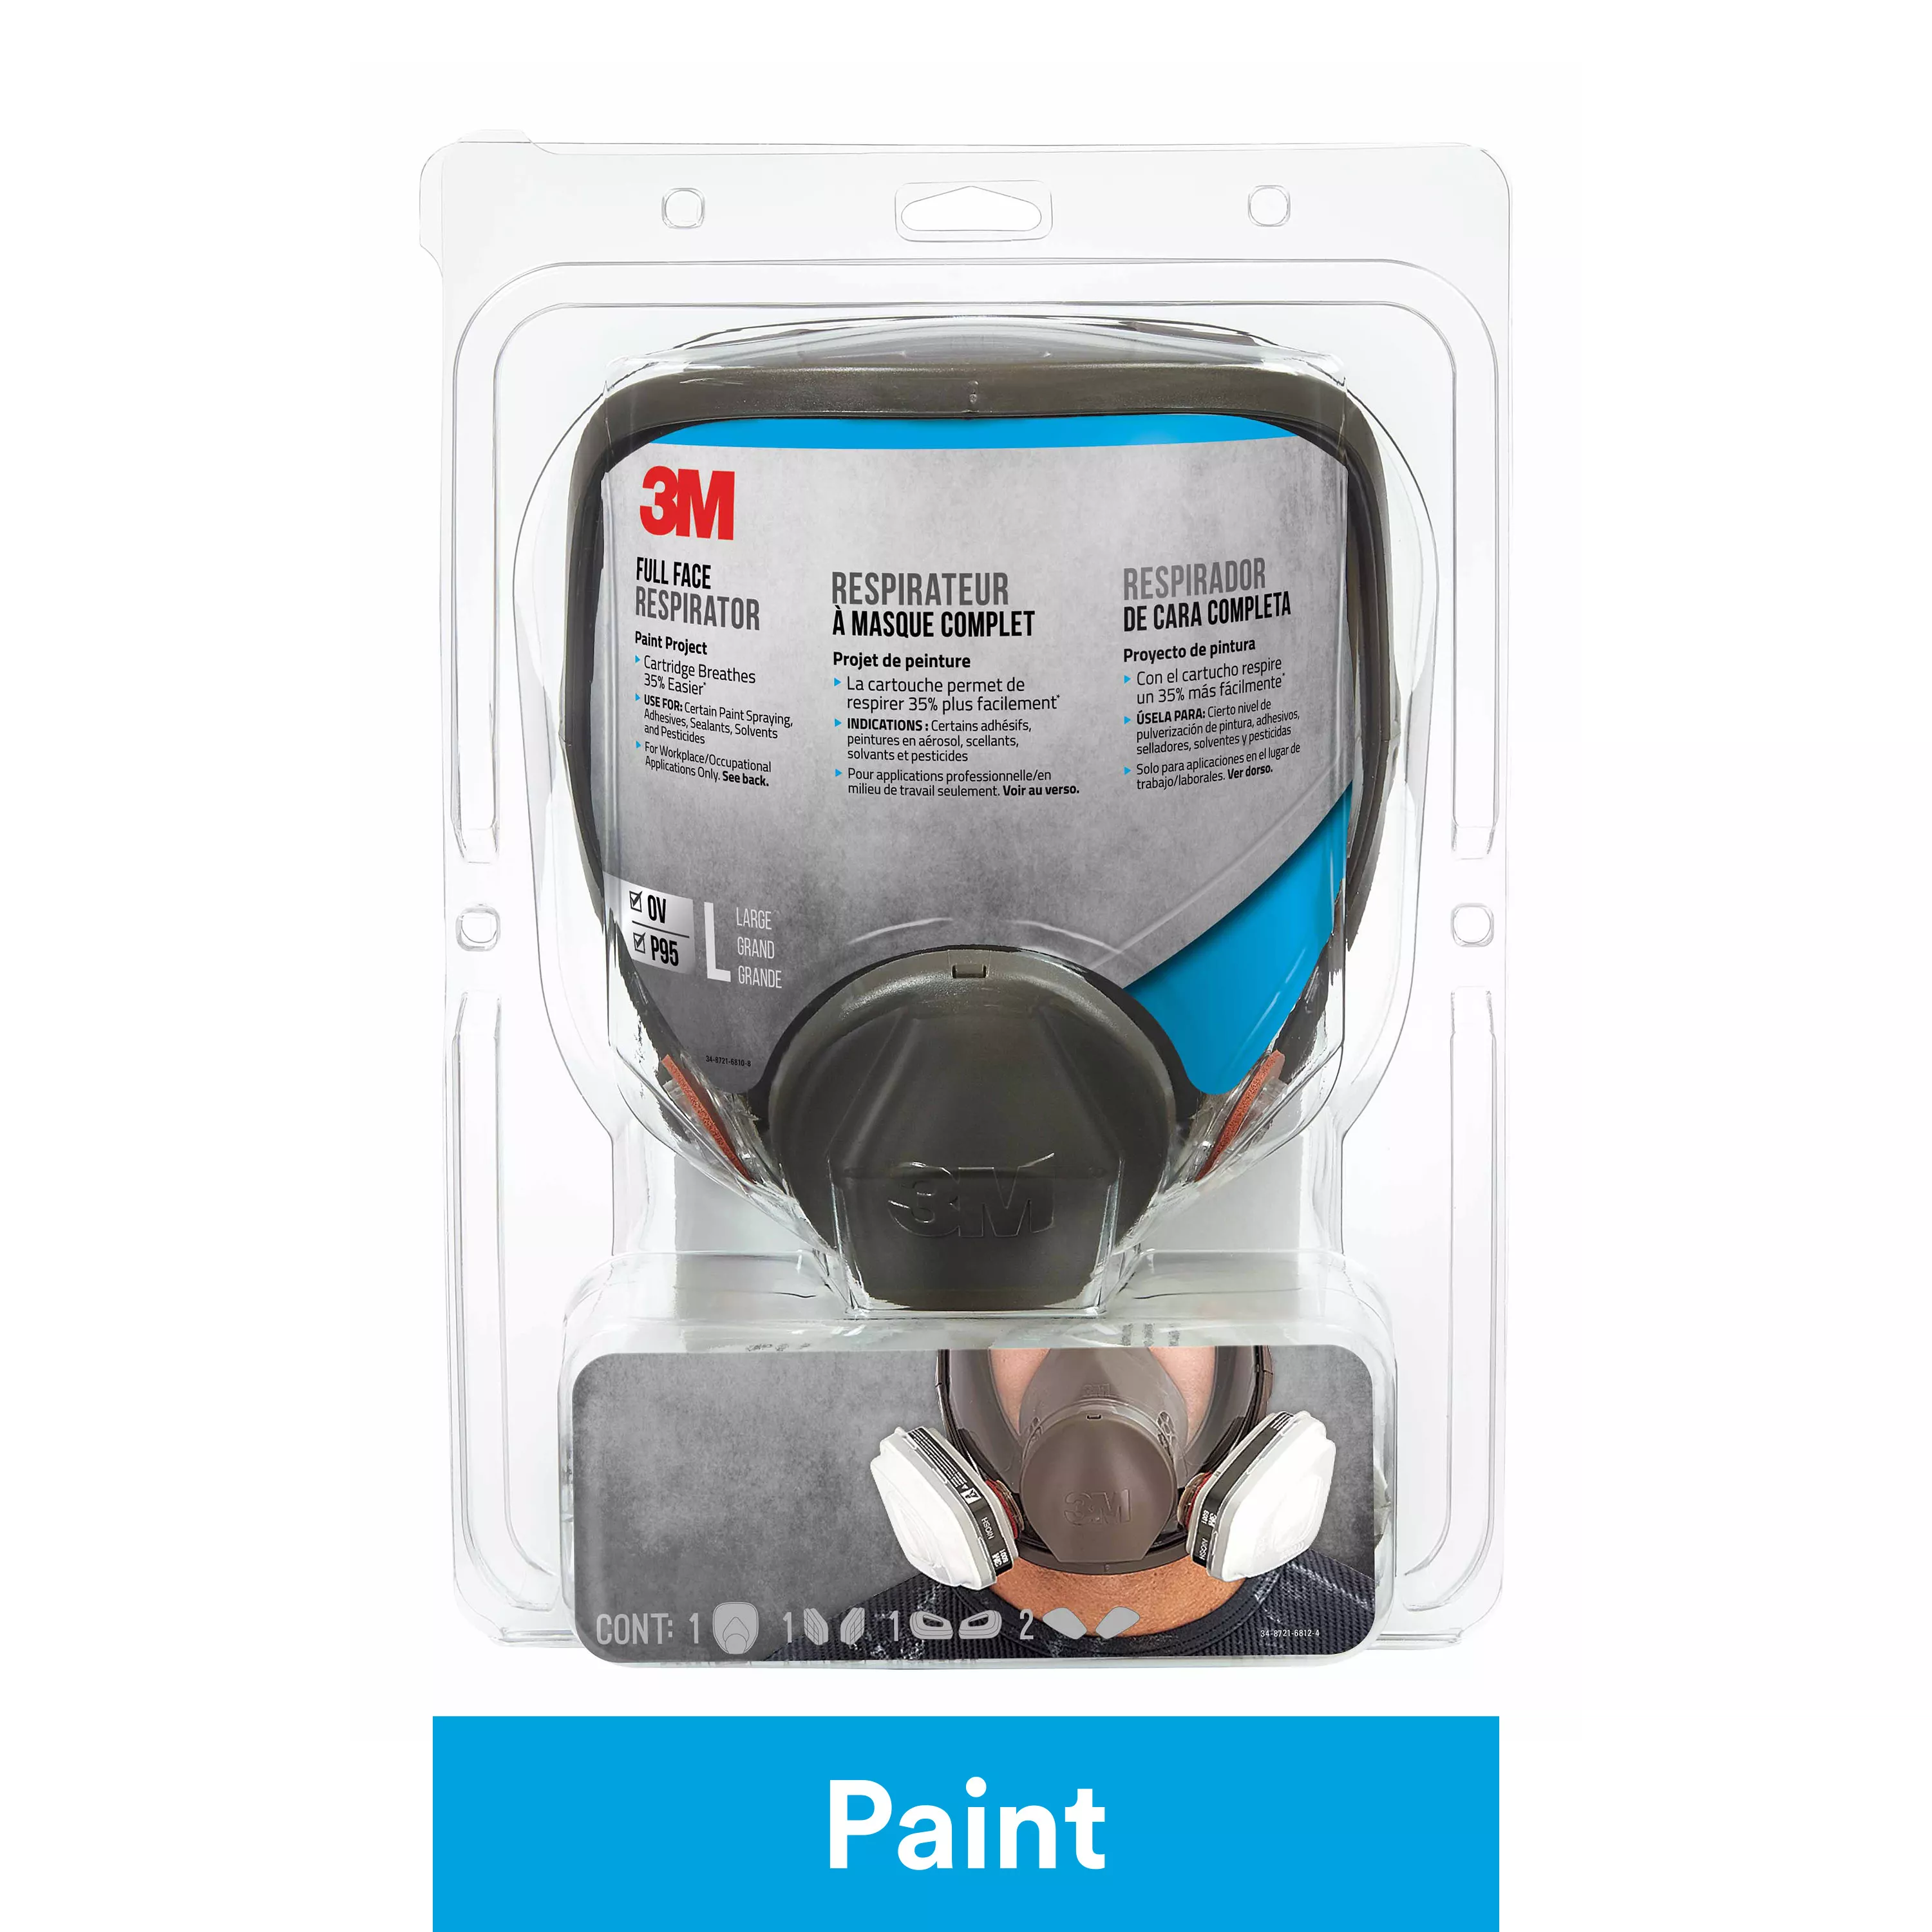 3M™ Full Face Reusable Paint Project Respirator OV/P95, 69P71P1-DC,
Large, 1 each/pack, 2 packs/case